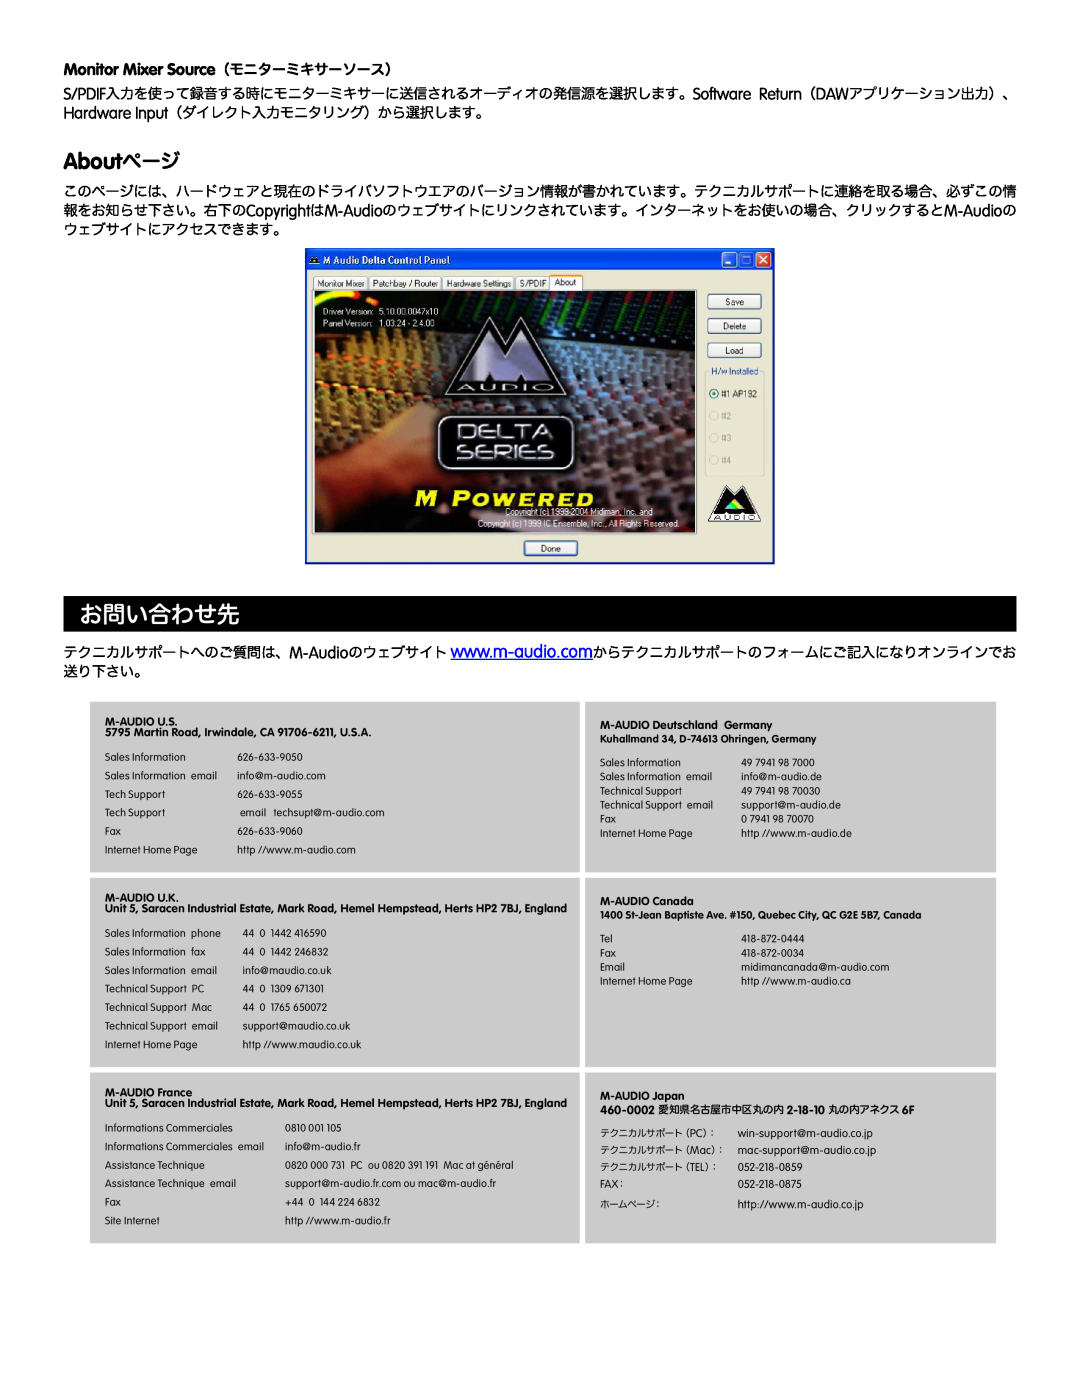 M-Audio 192 manual Aboutページ, お問い合わせ先, Monitor Mixer Source（モニターミキサーソース） 